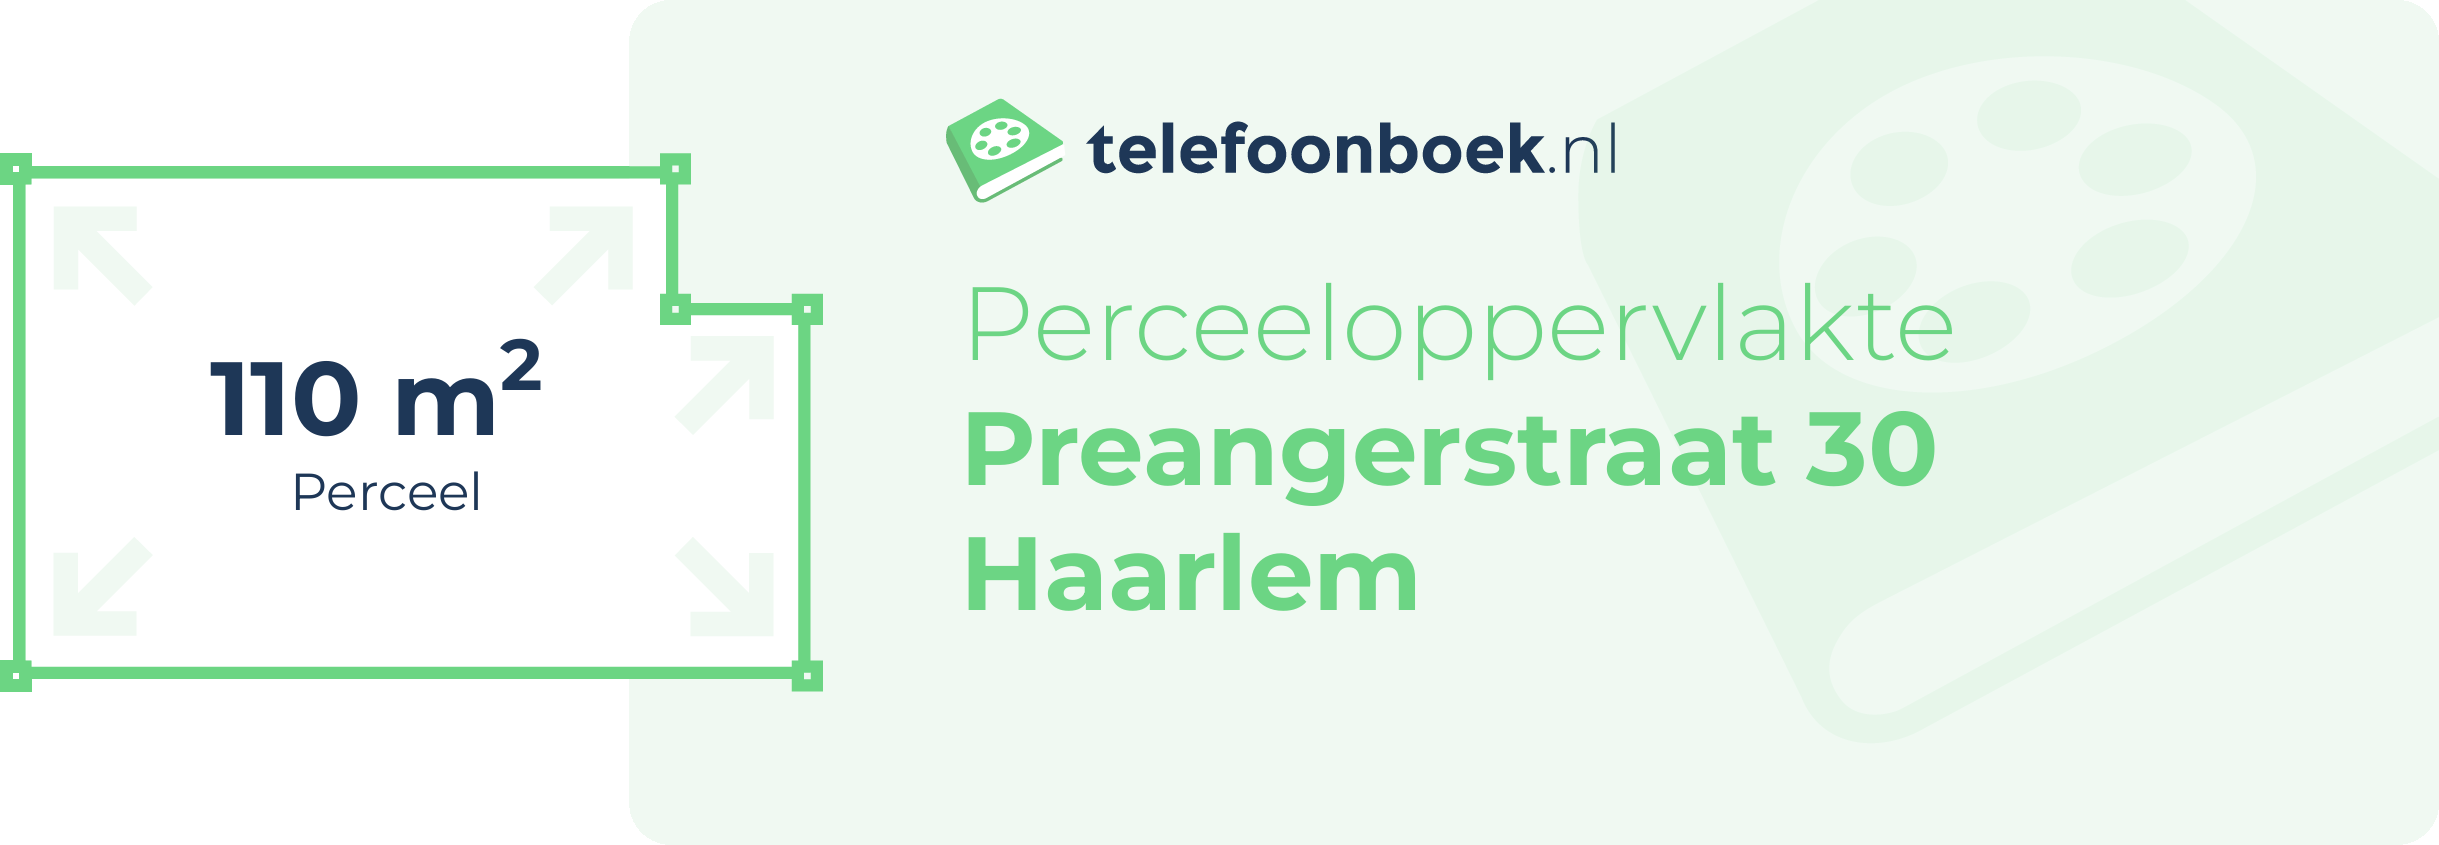 Perceeloppervlakte Preangerstraat 30 Haarlem